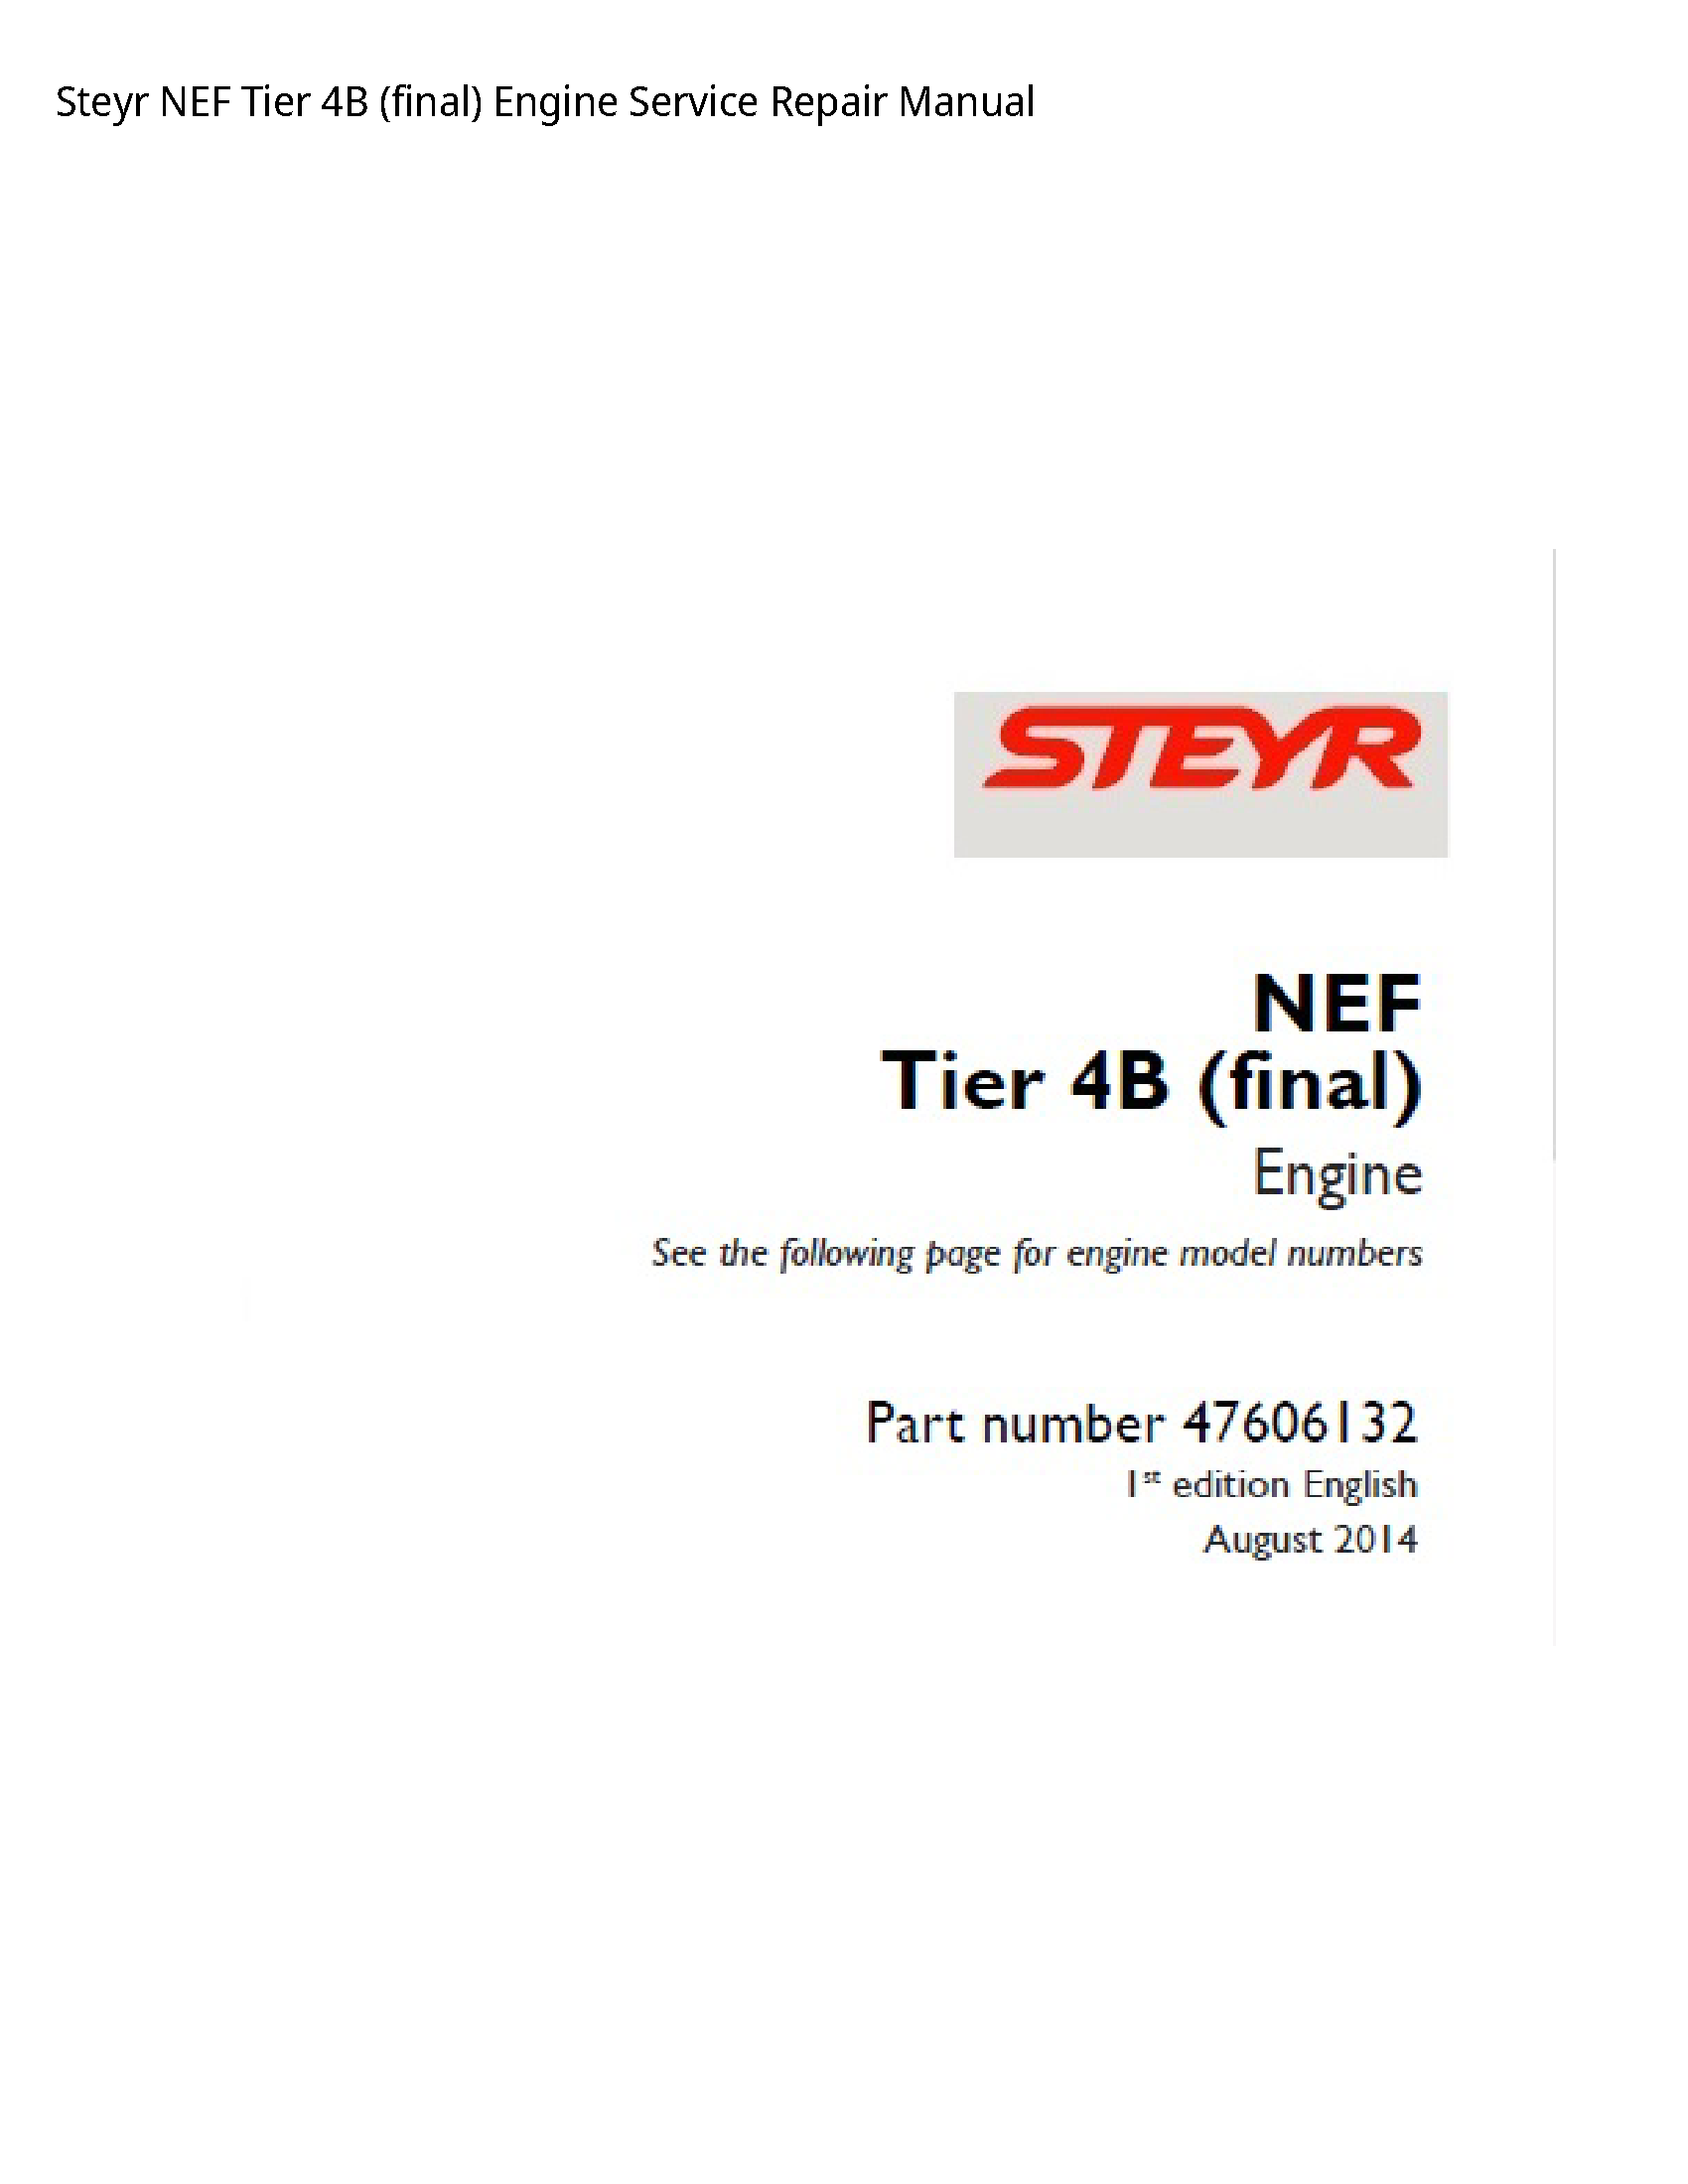 Steyr 4B NEF Tier (final) Engine manual